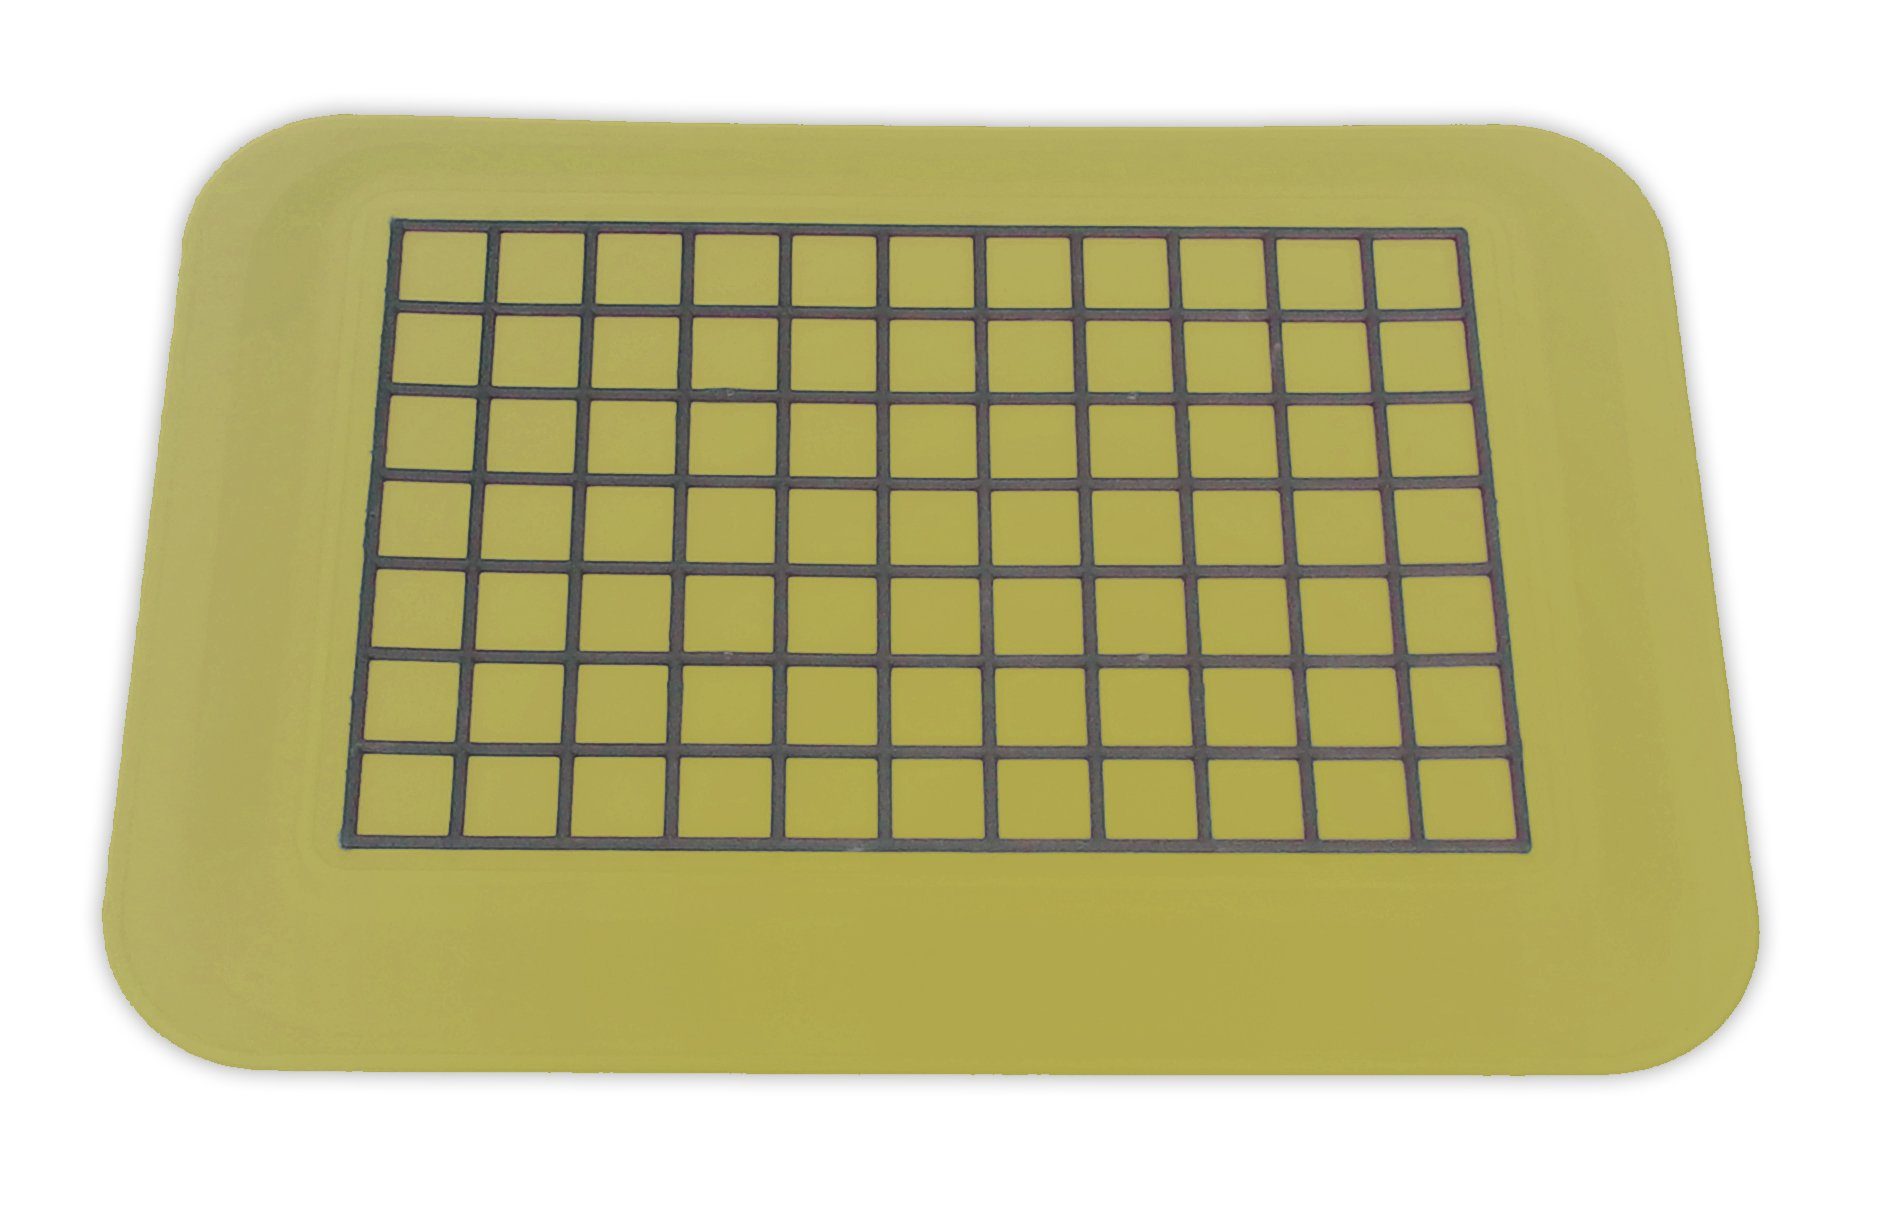 Reinex Tablett TABLETT mit Anti-Rutsch-Belag 33x23cm 36 (Grün) Kunststoff Grün Frühstückstablett Serviertablett